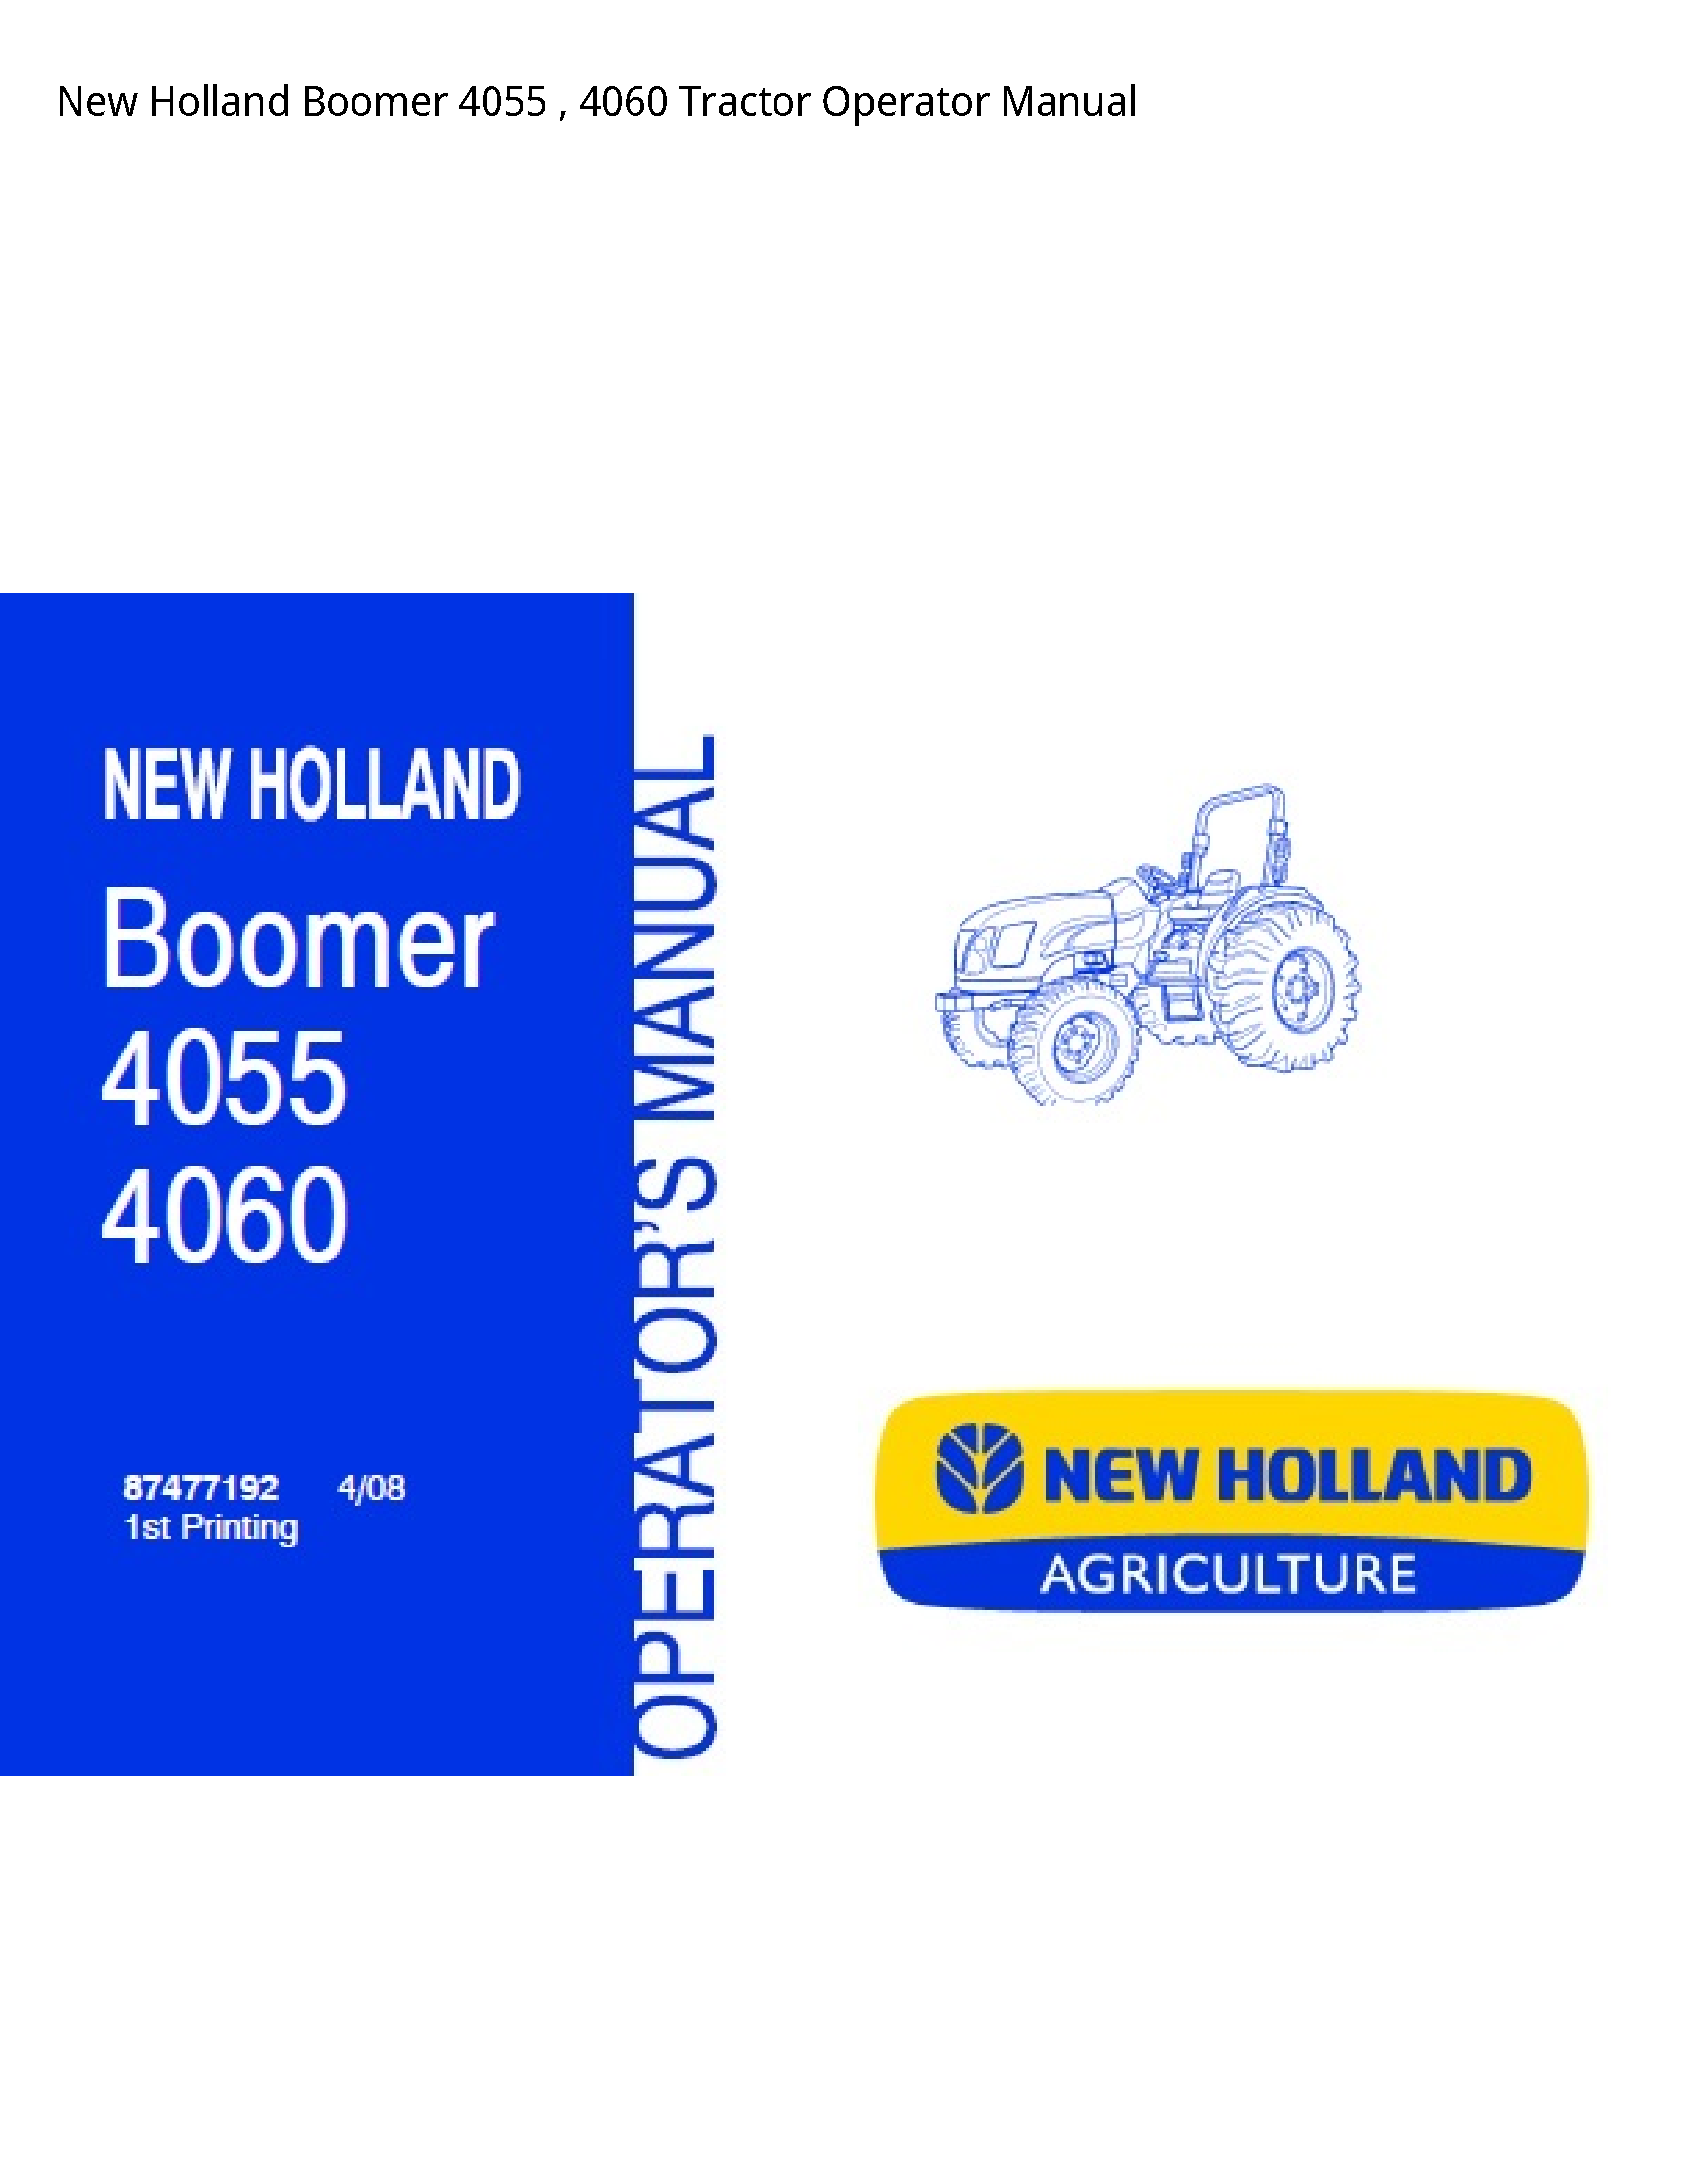 New Holland 4055 Boomer Tractor Operator manual